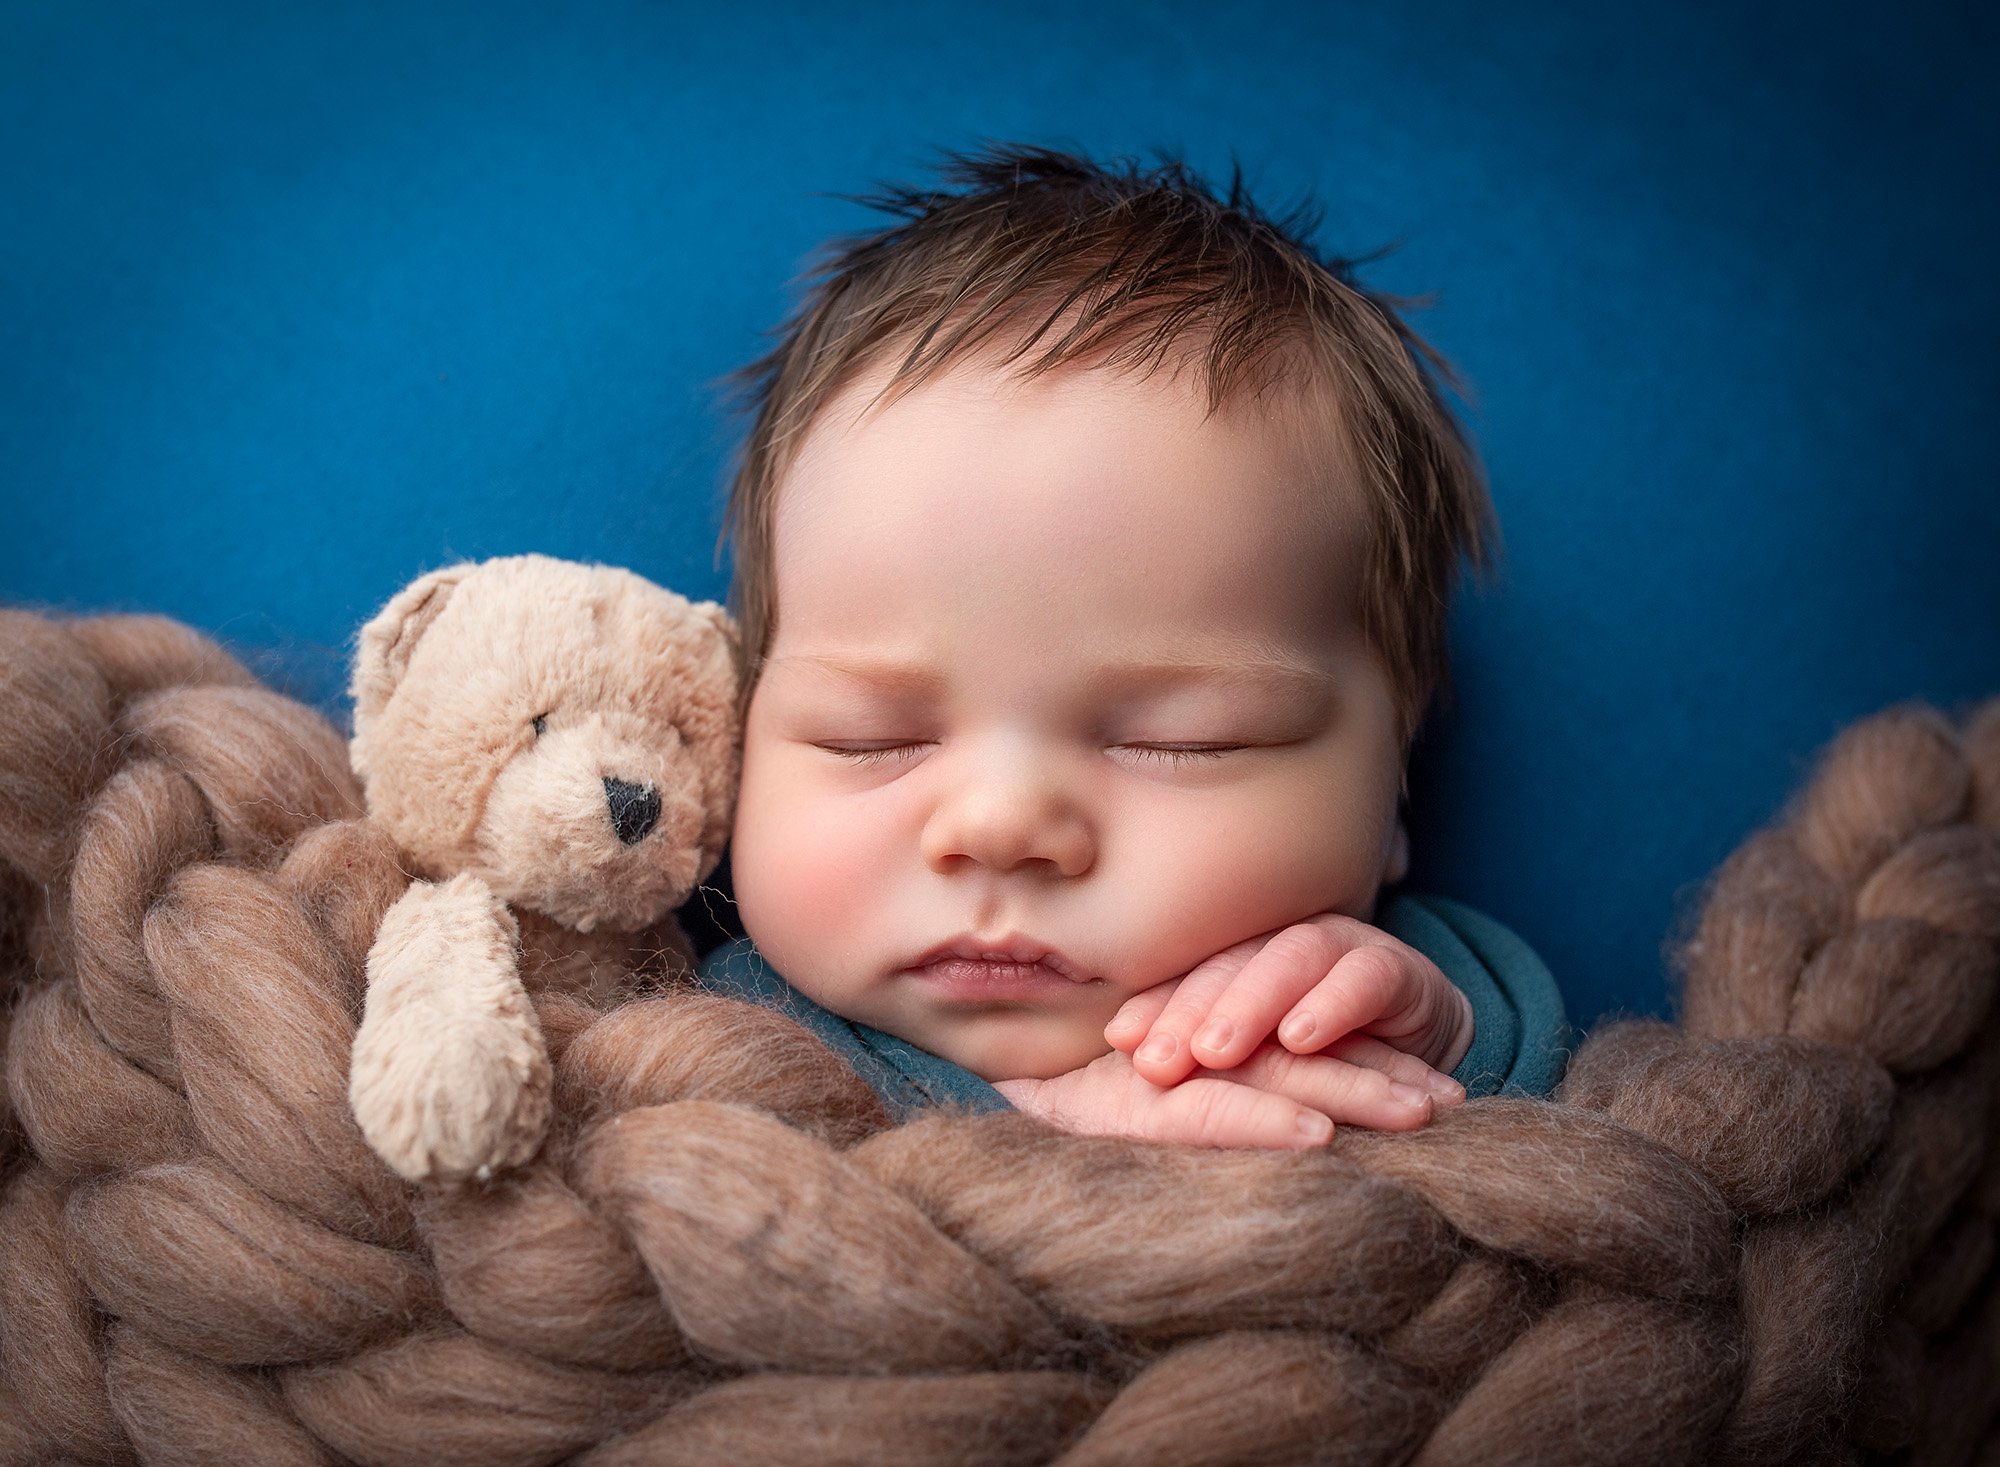 Connecticut Newborn Photography newborn baby boy asleep tucked under fluffy brown blanket with teddy bear